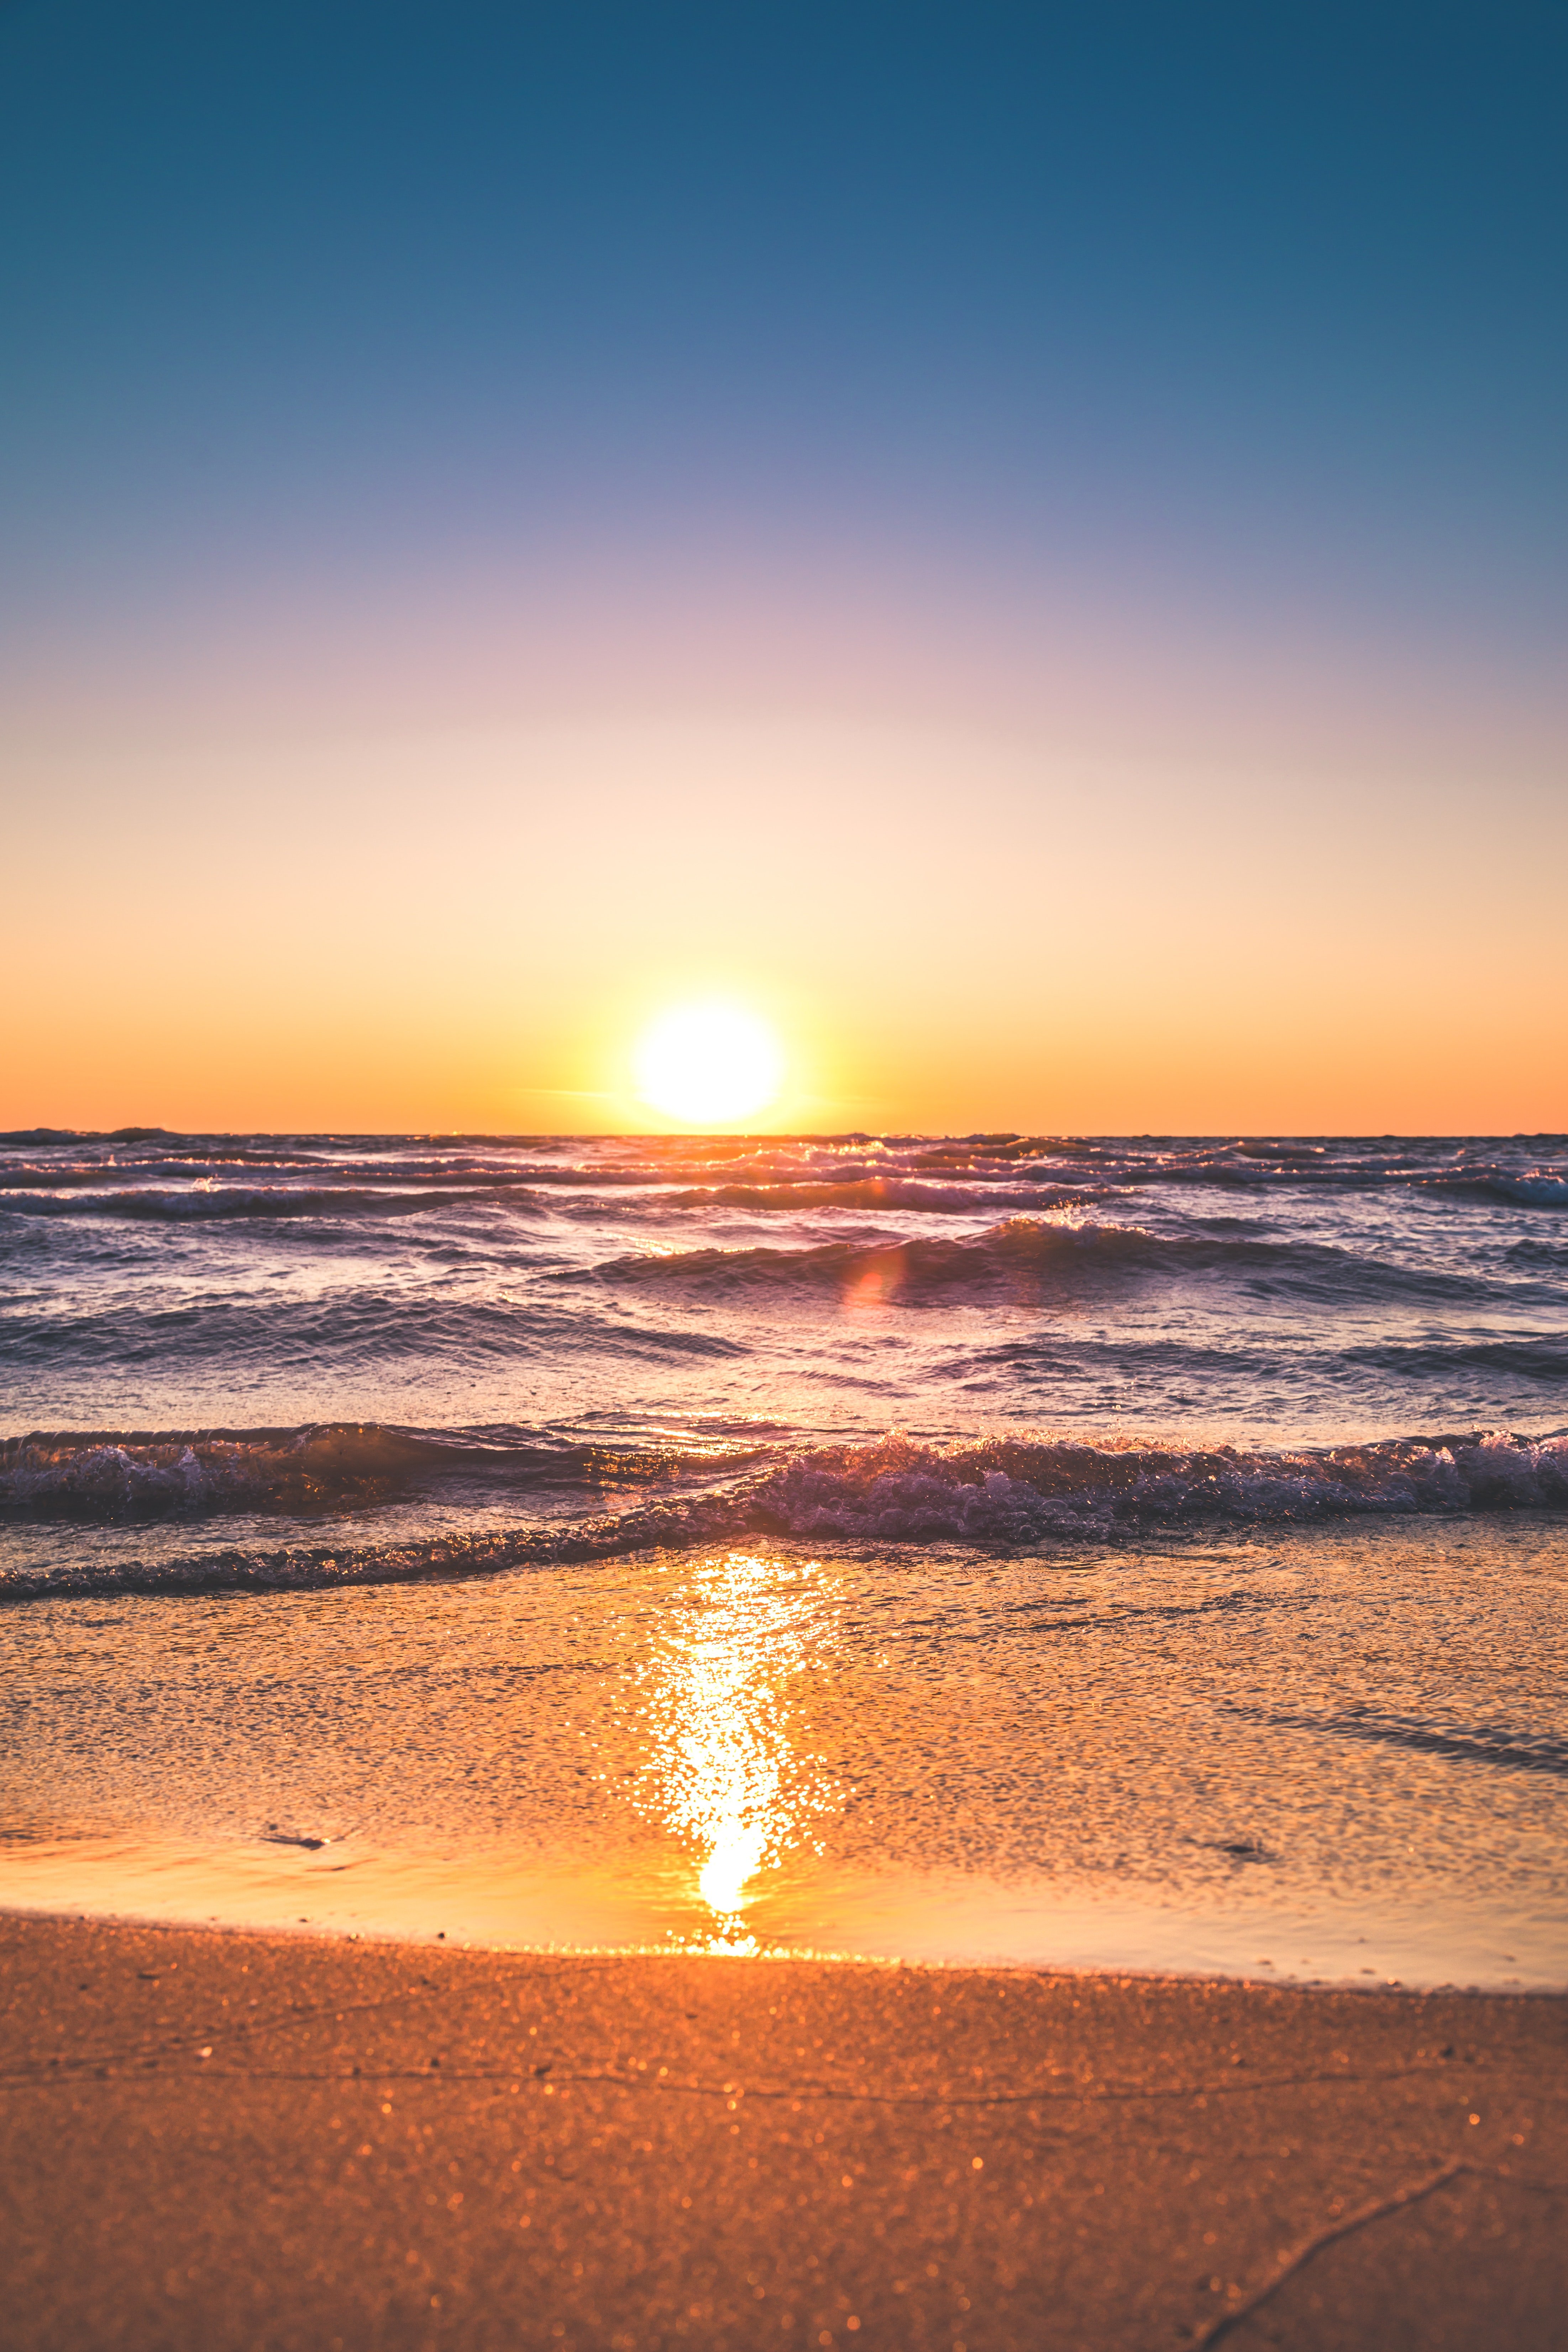 Best Free Sunset Beach & Image · 100% Royalty Free HD Downloads